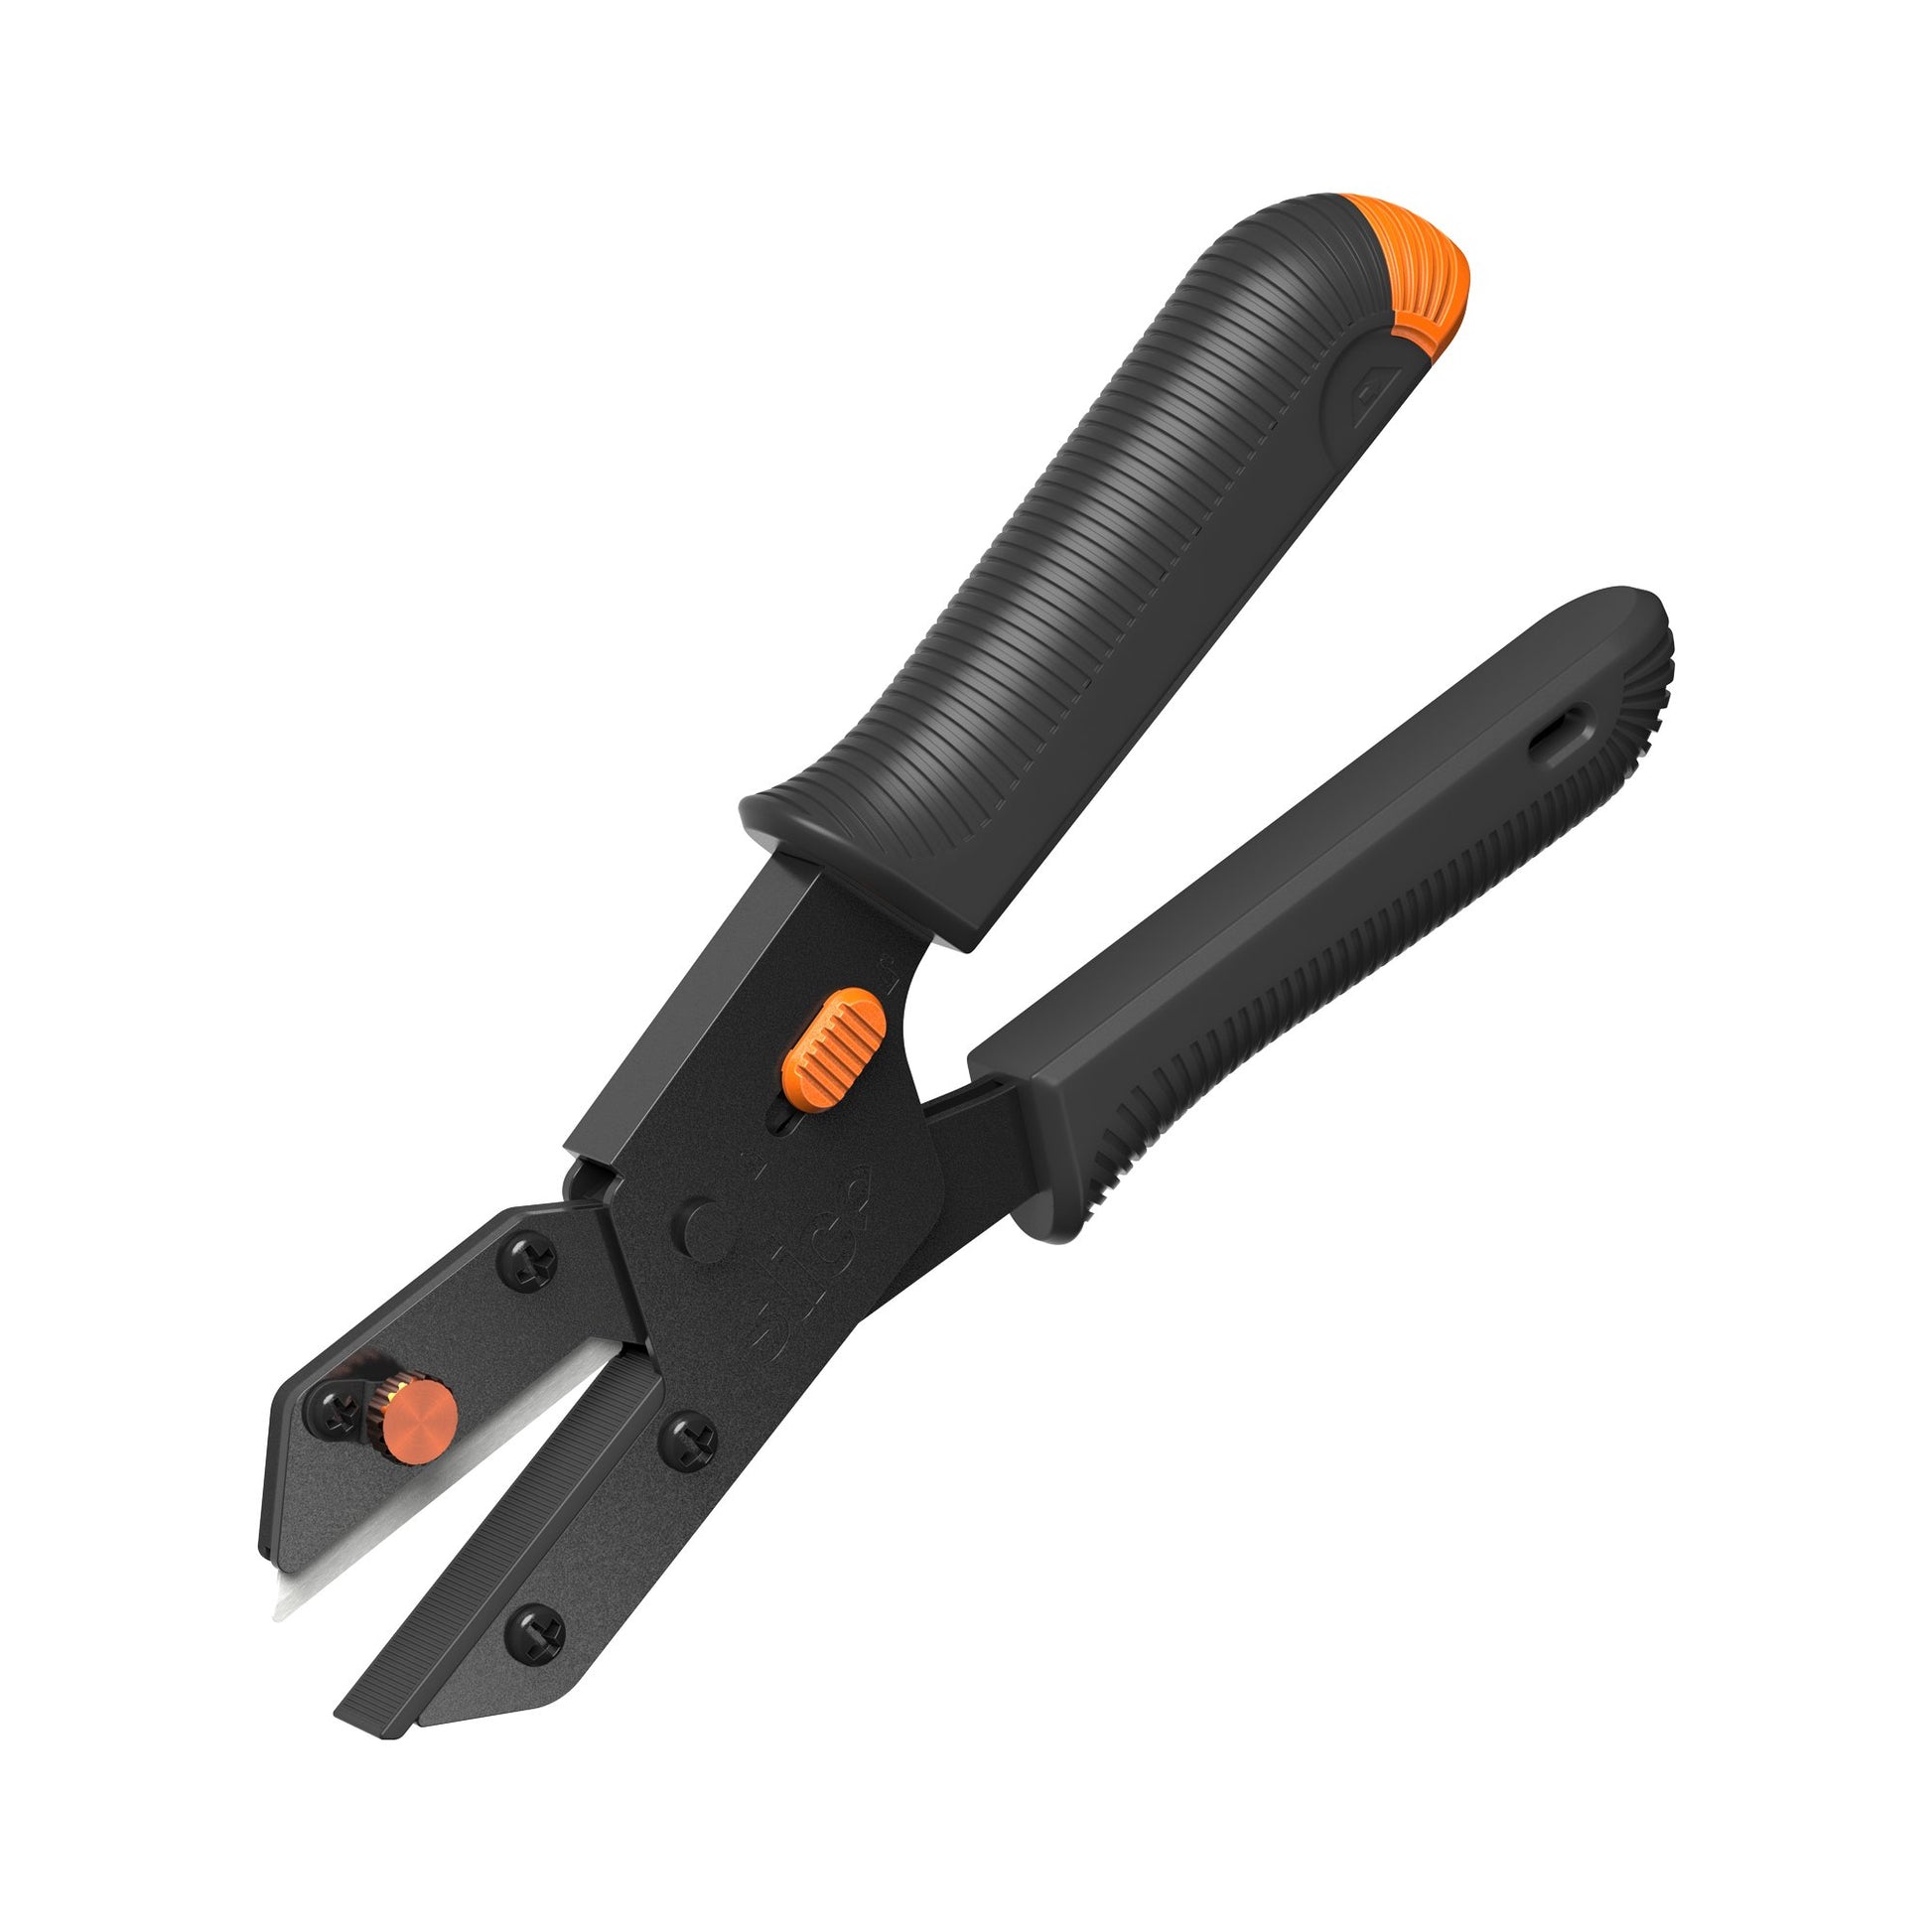 Slice folding utility knives review - Do safer blades make a